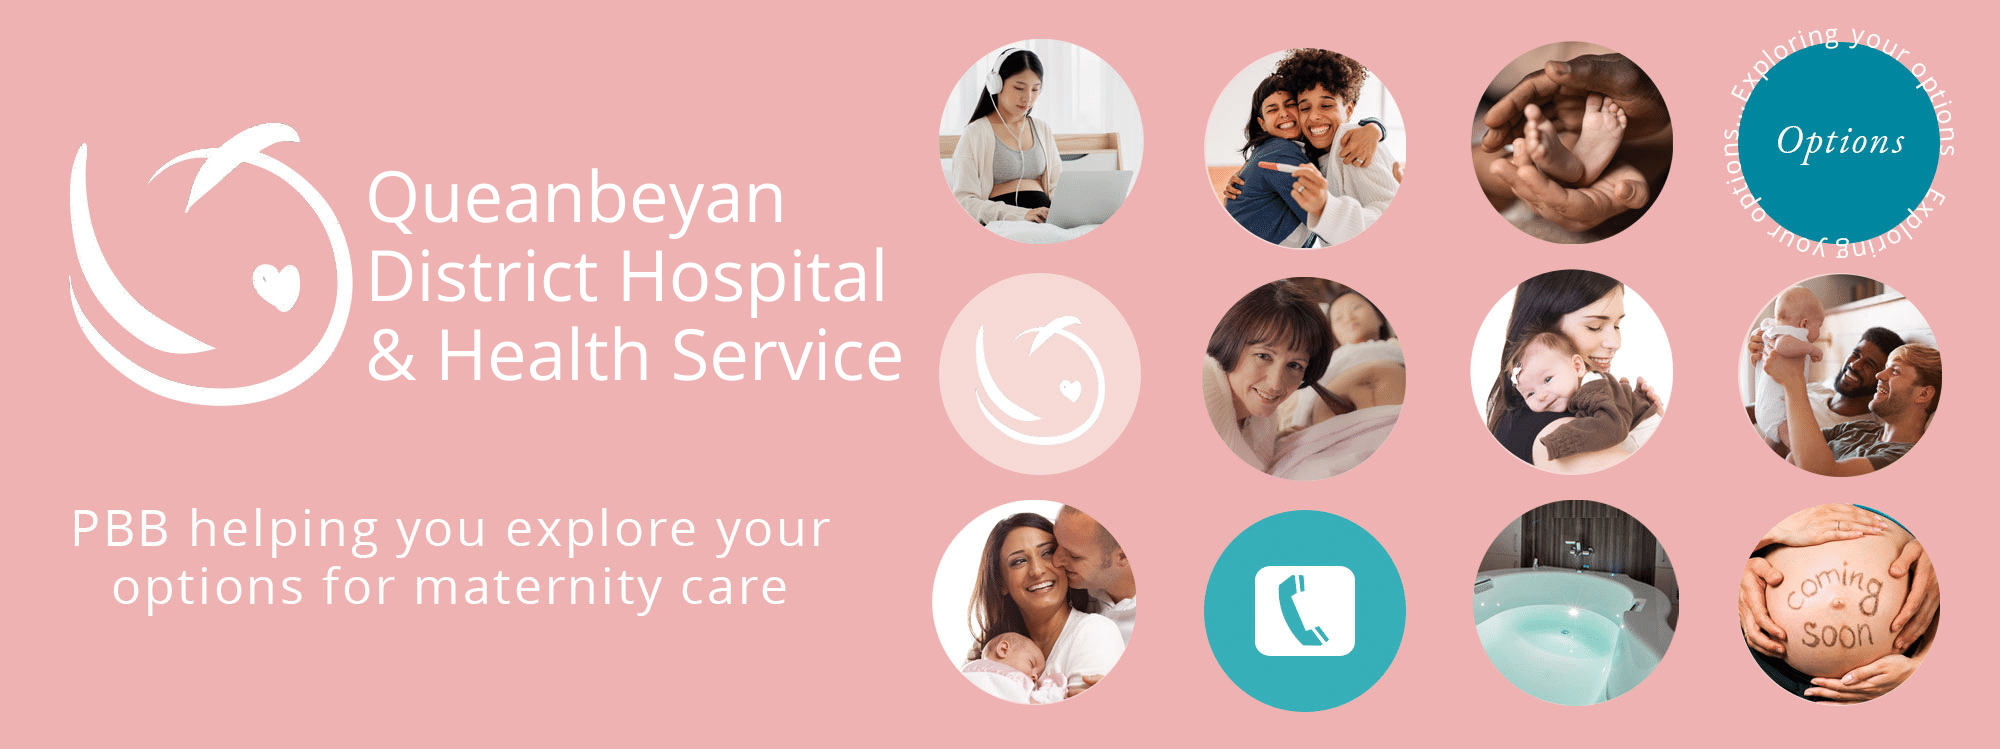 Queanbeyan District Hospital & Health Service